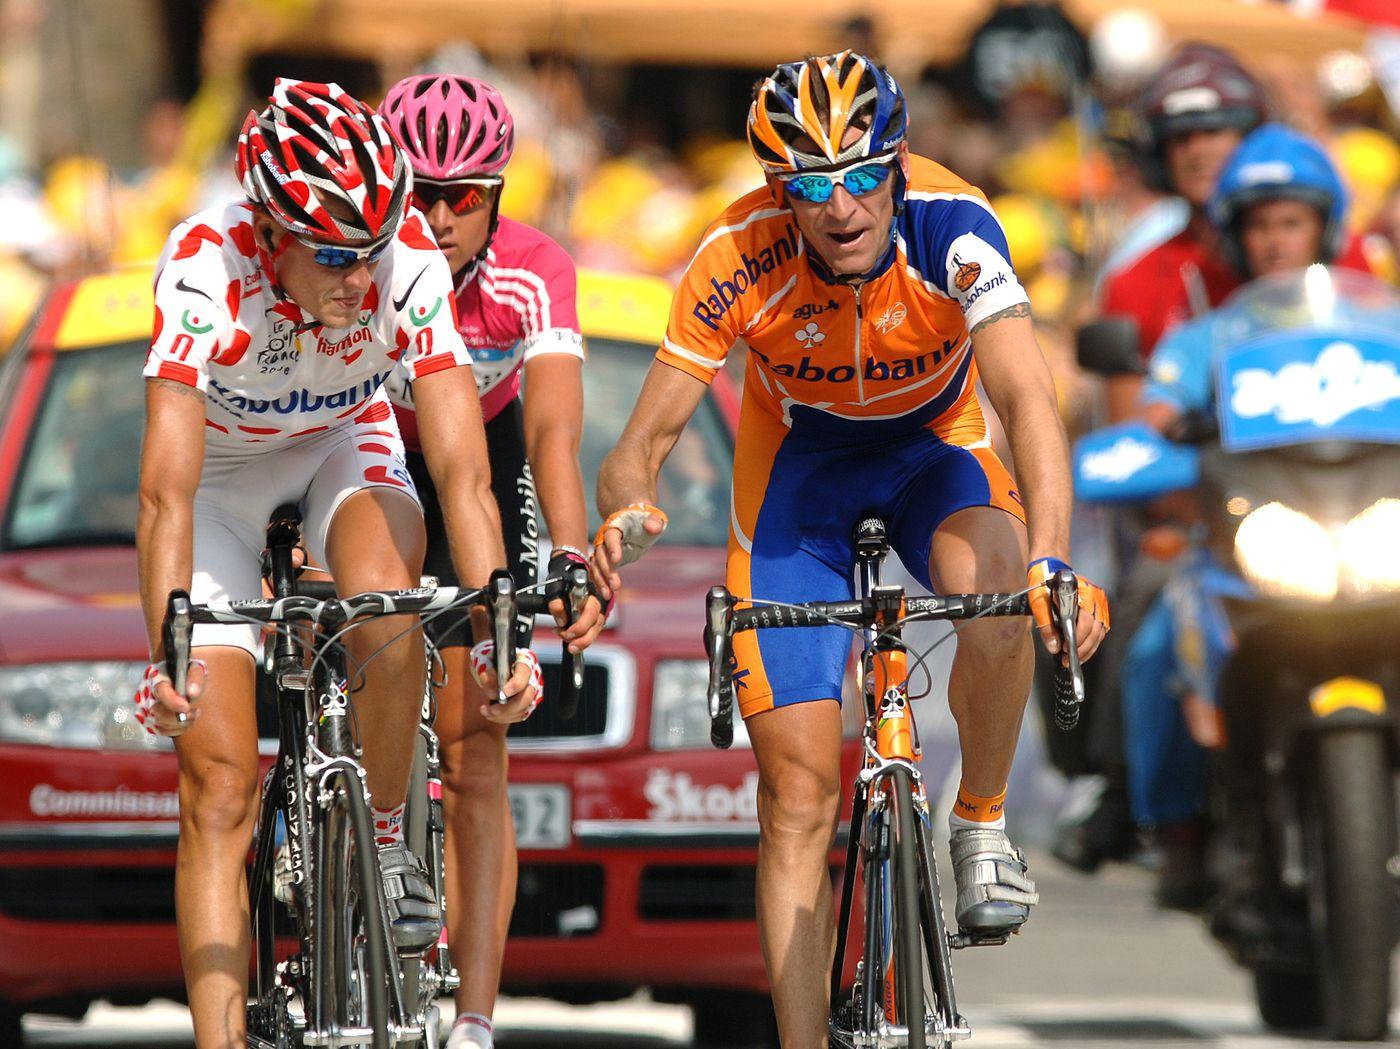 A Brief History of Jumbo Visma Never Winning the Tour de France